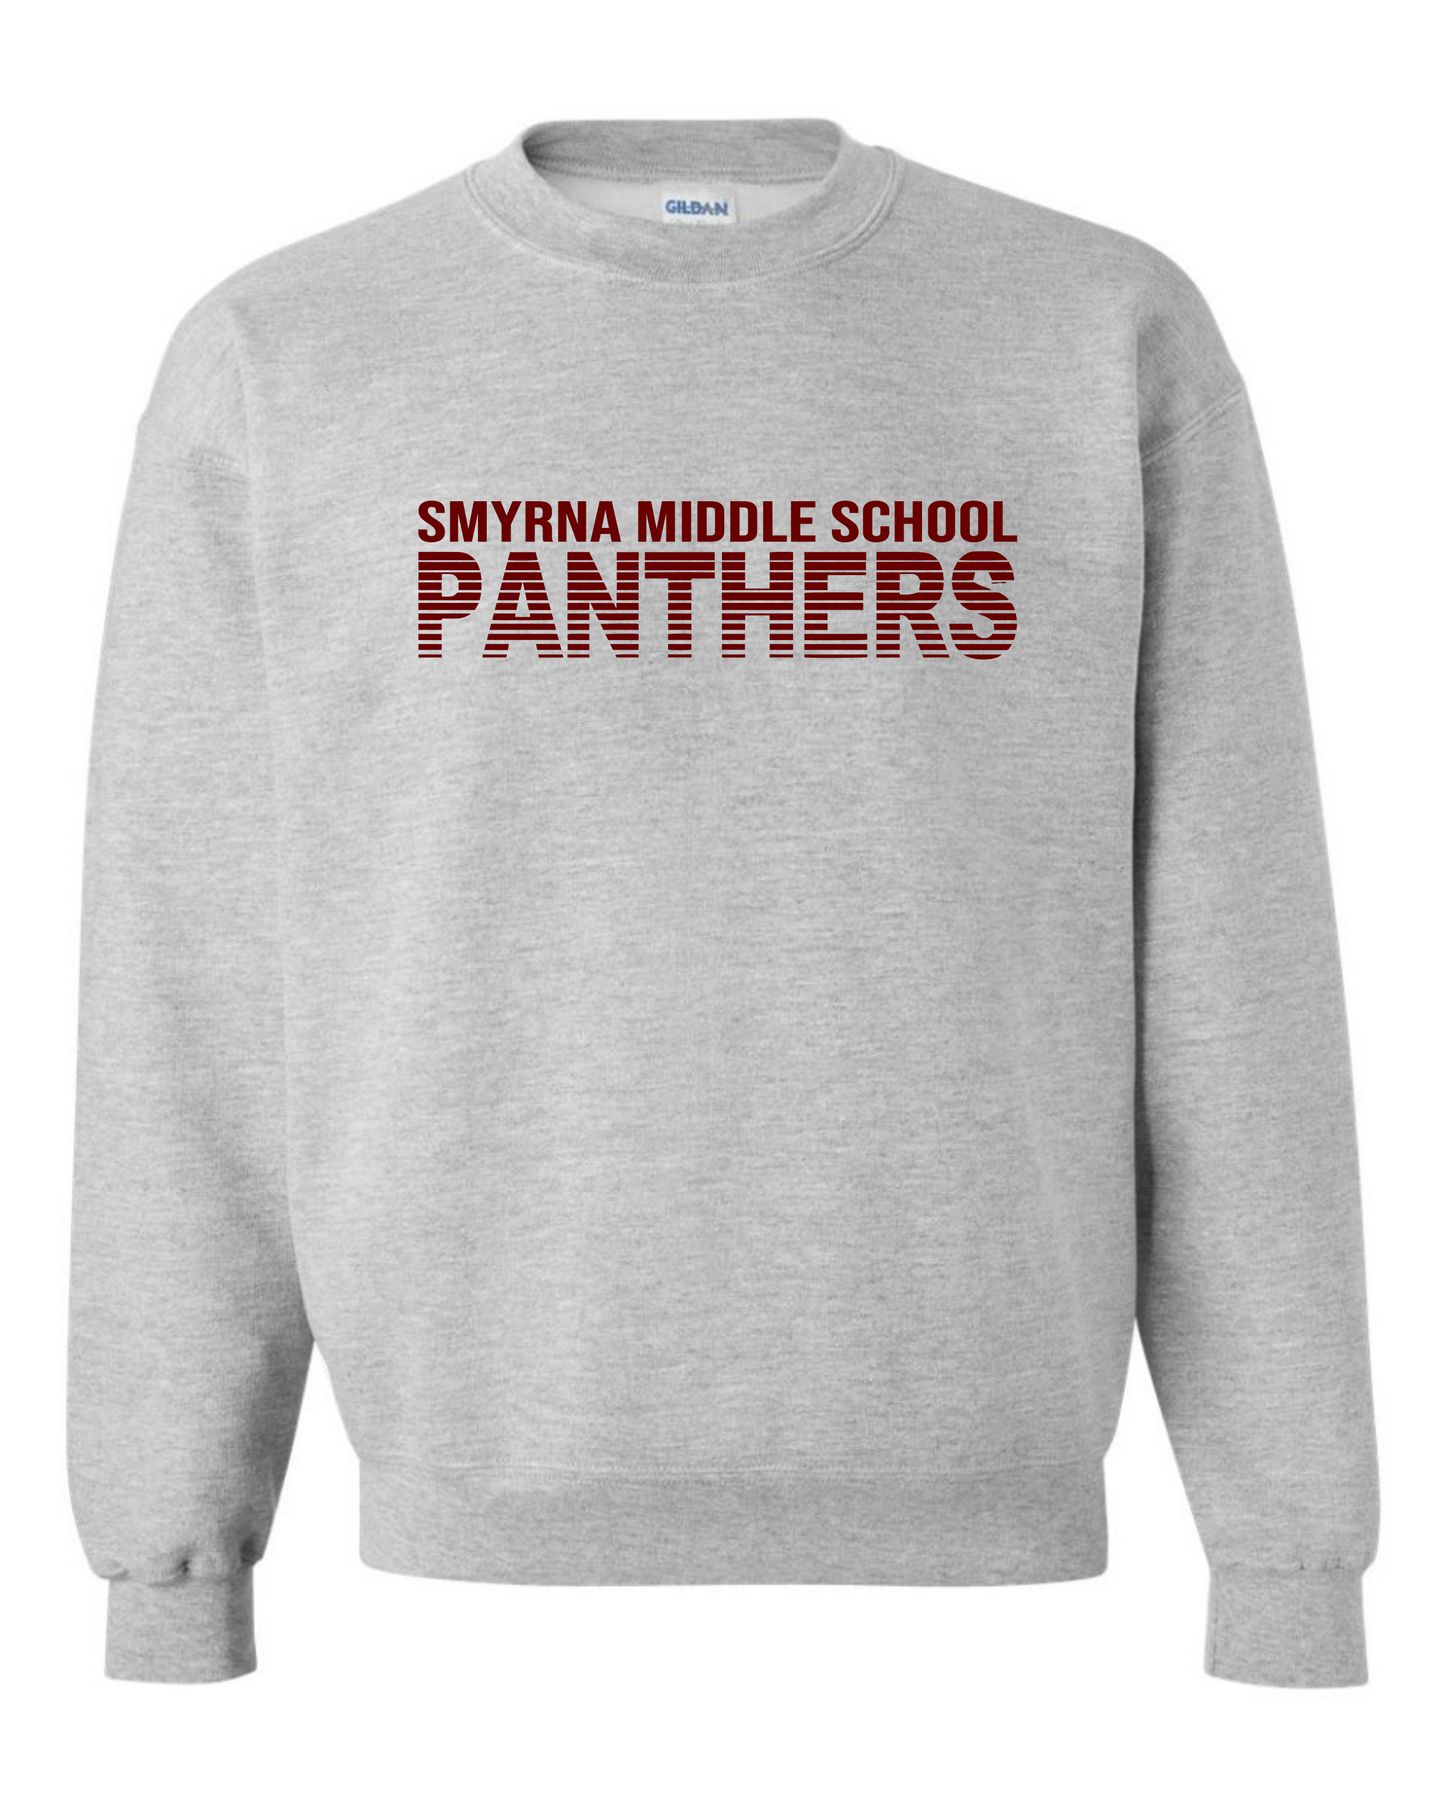 Smyrna Middle School Panthers Sweatshirt